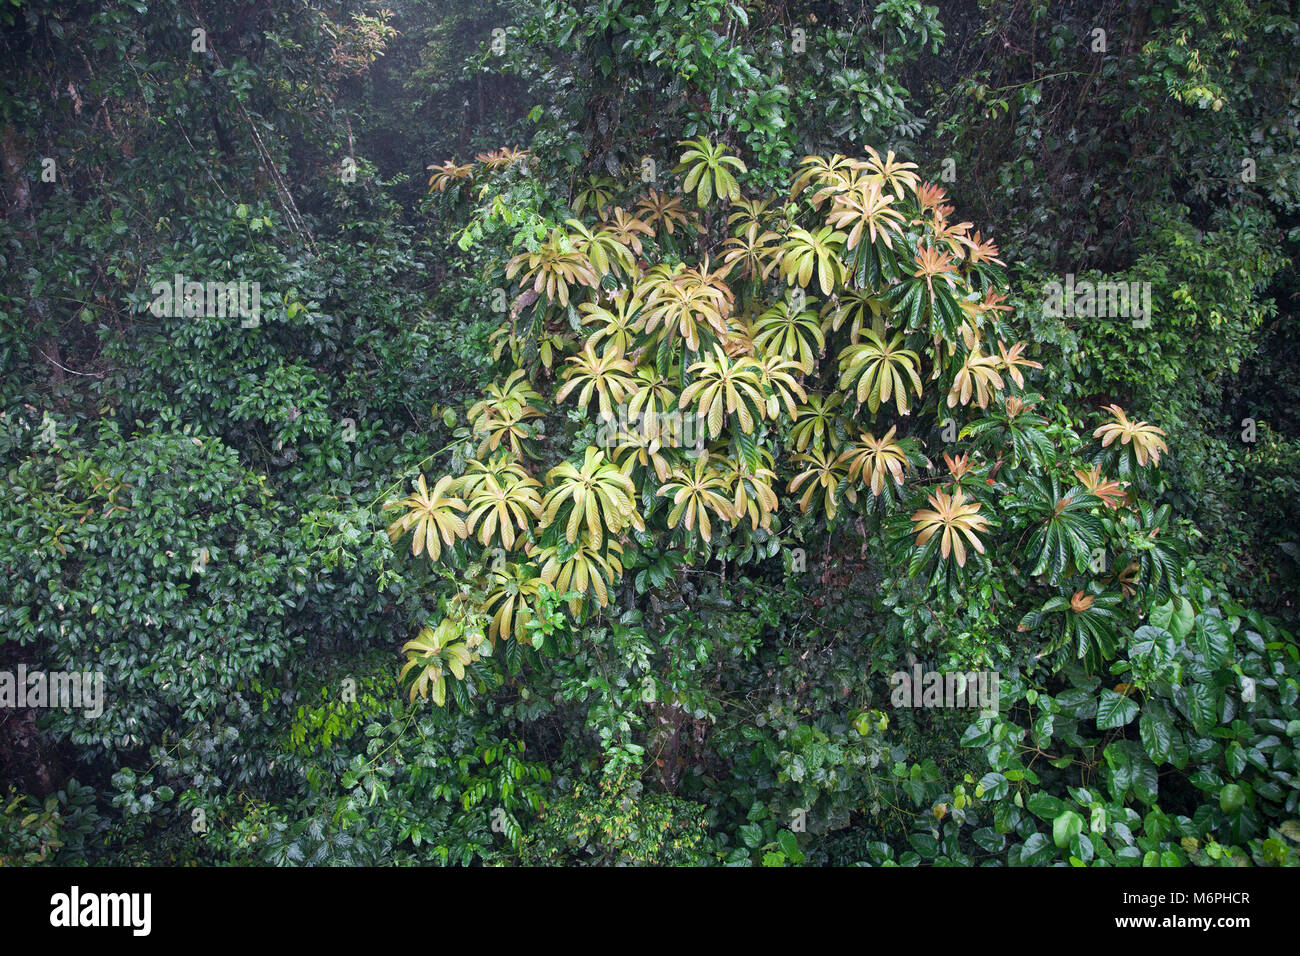 Barringtonia tree in undisturbed lowland tropical rainforest vegetation, Sabah, Borneo Stock Photo